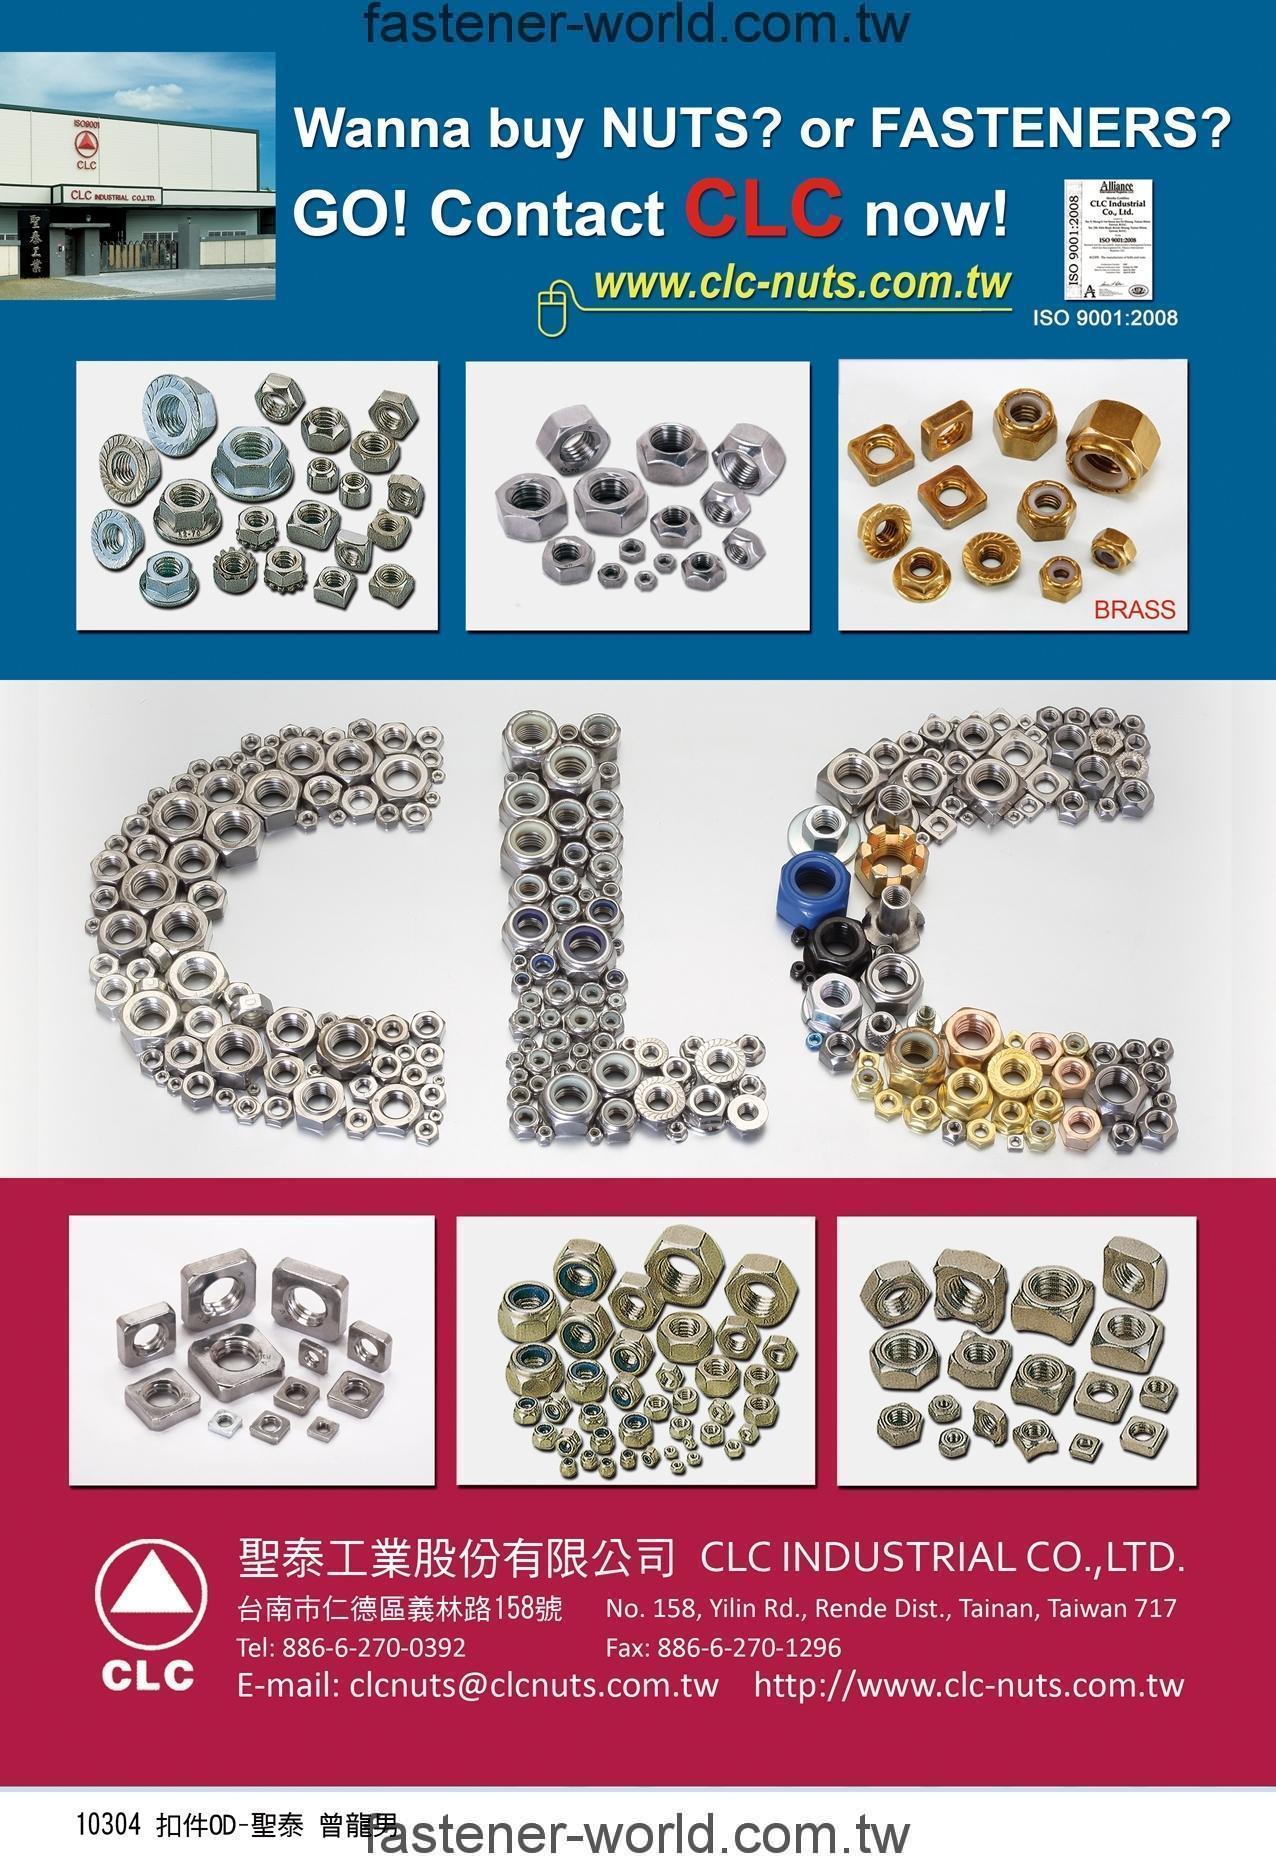 CLC INDUSTRIAL CO., LTD. Online Catalogues